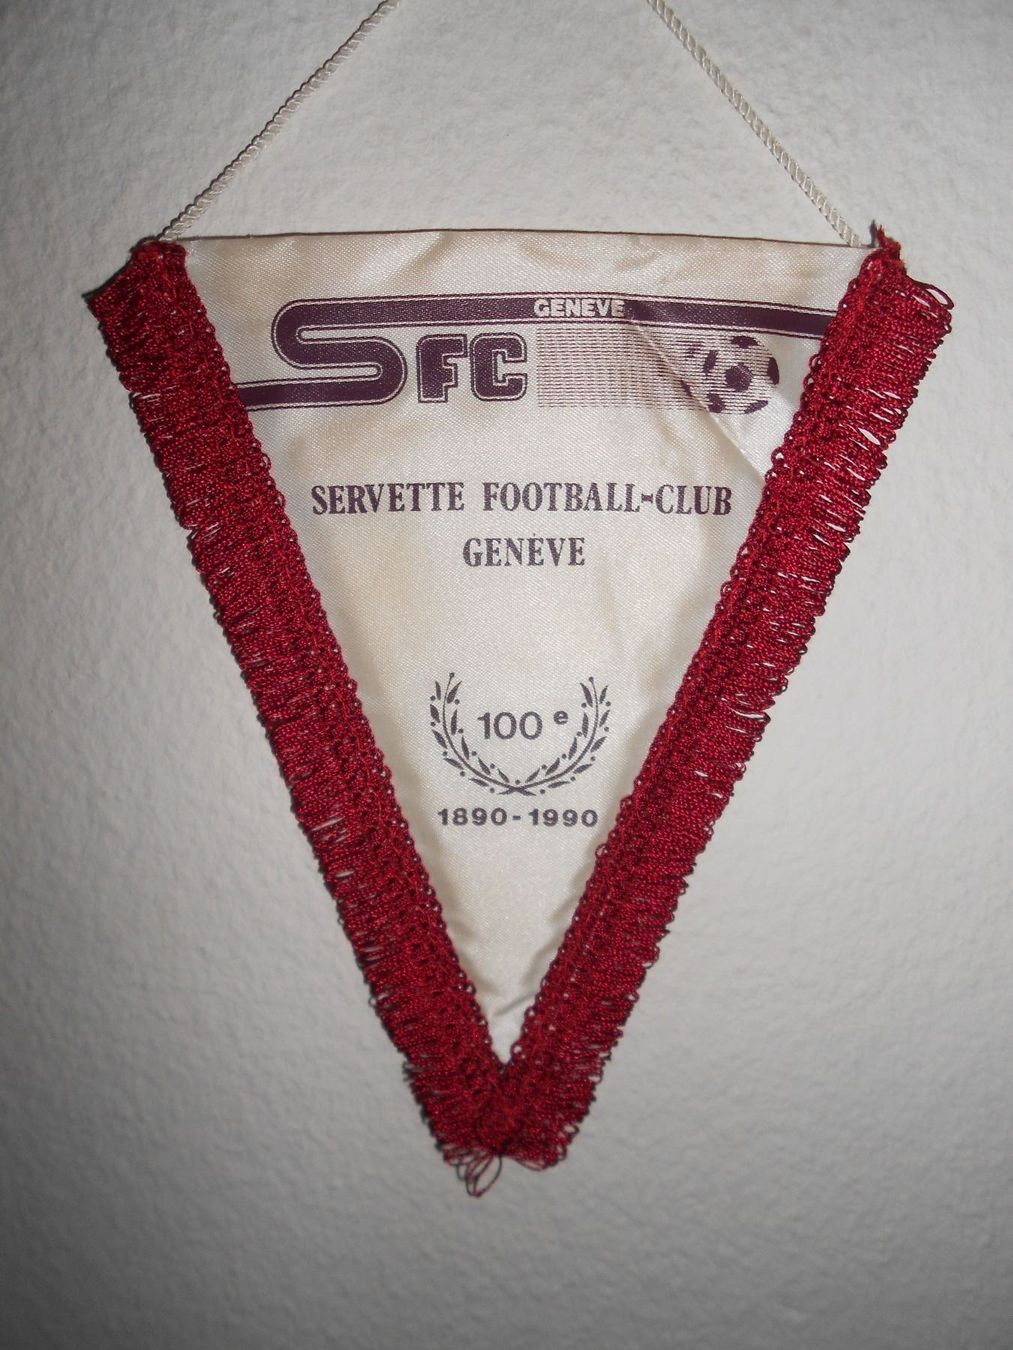 Schweiz / Switzerland Wimpel 8 x 10 cm Servette Geneve 